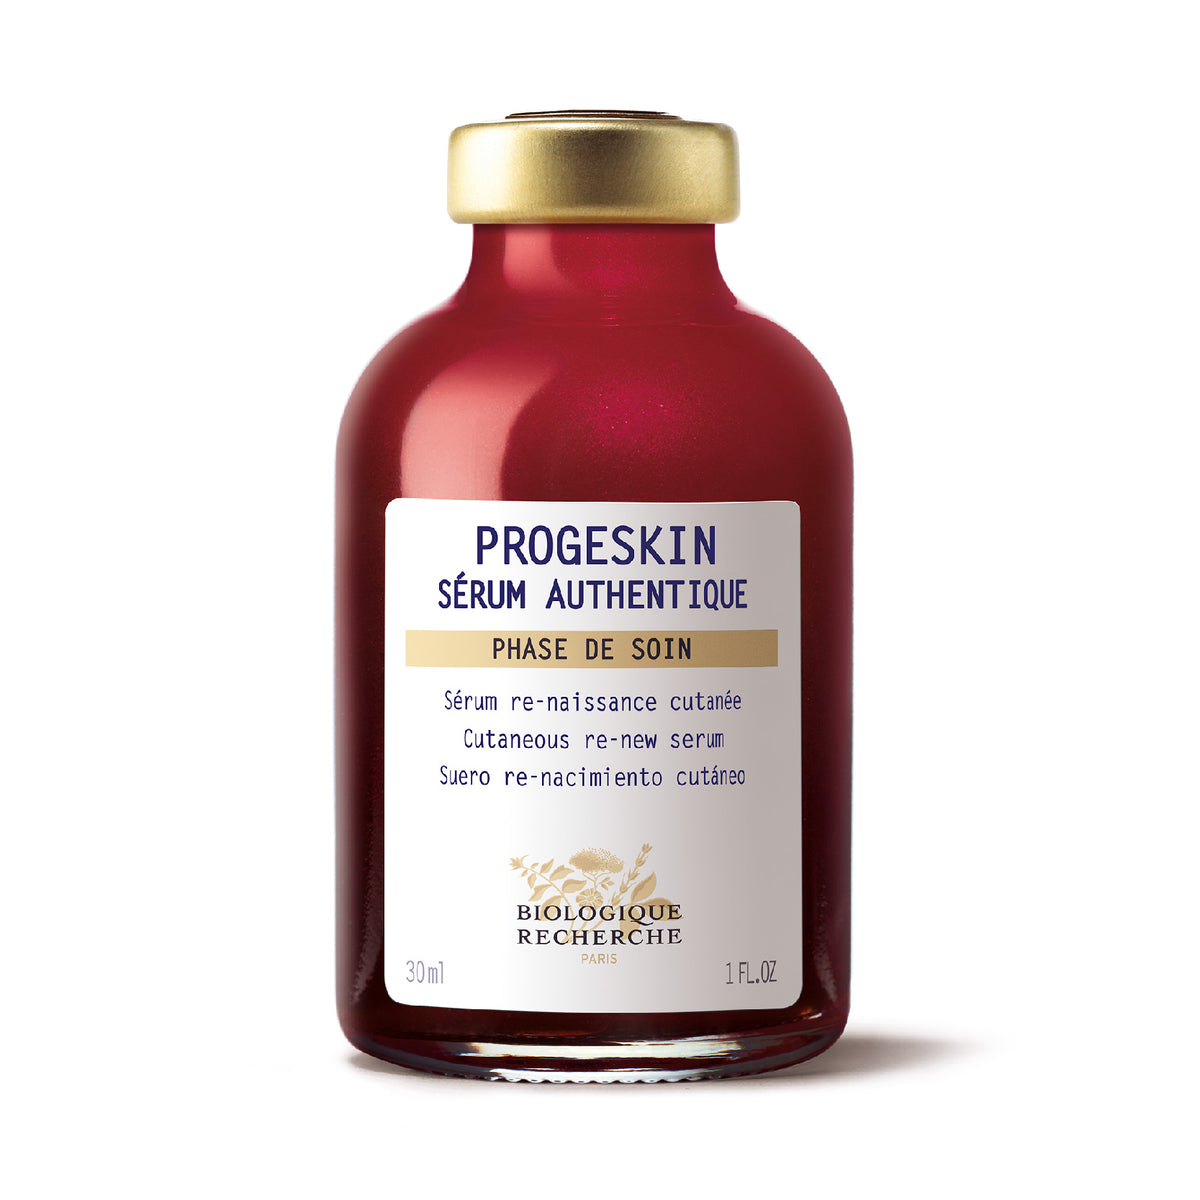 Progeskin -- Quintessential Serum ** Cutaneous Re-New Serum